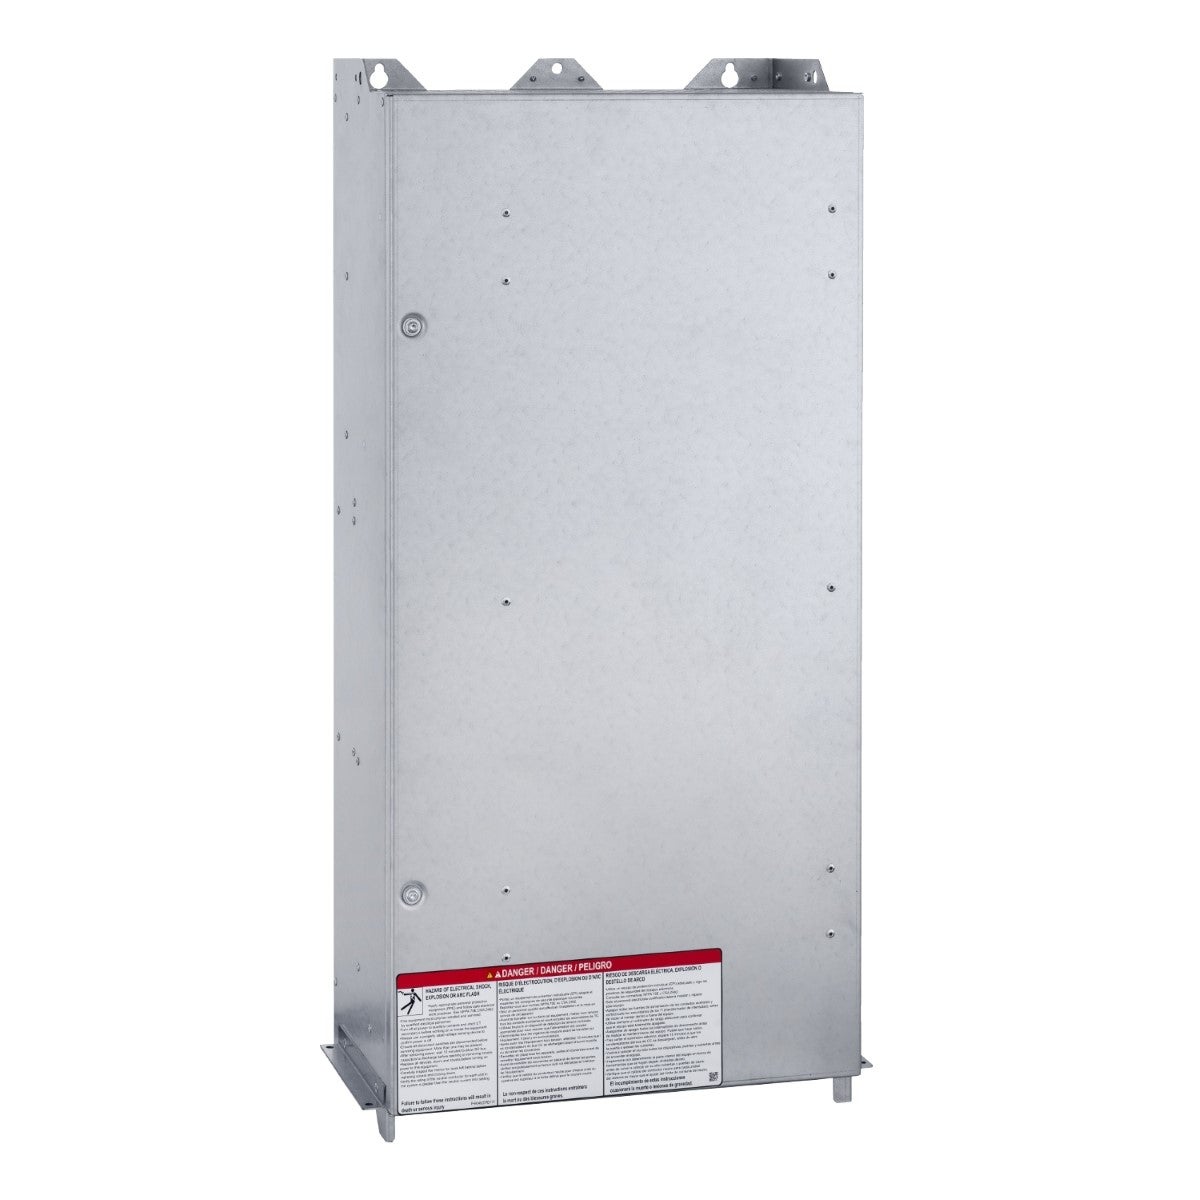 PCSN active harmonic filter 60 amp 208-415 VAC - rack-mounted